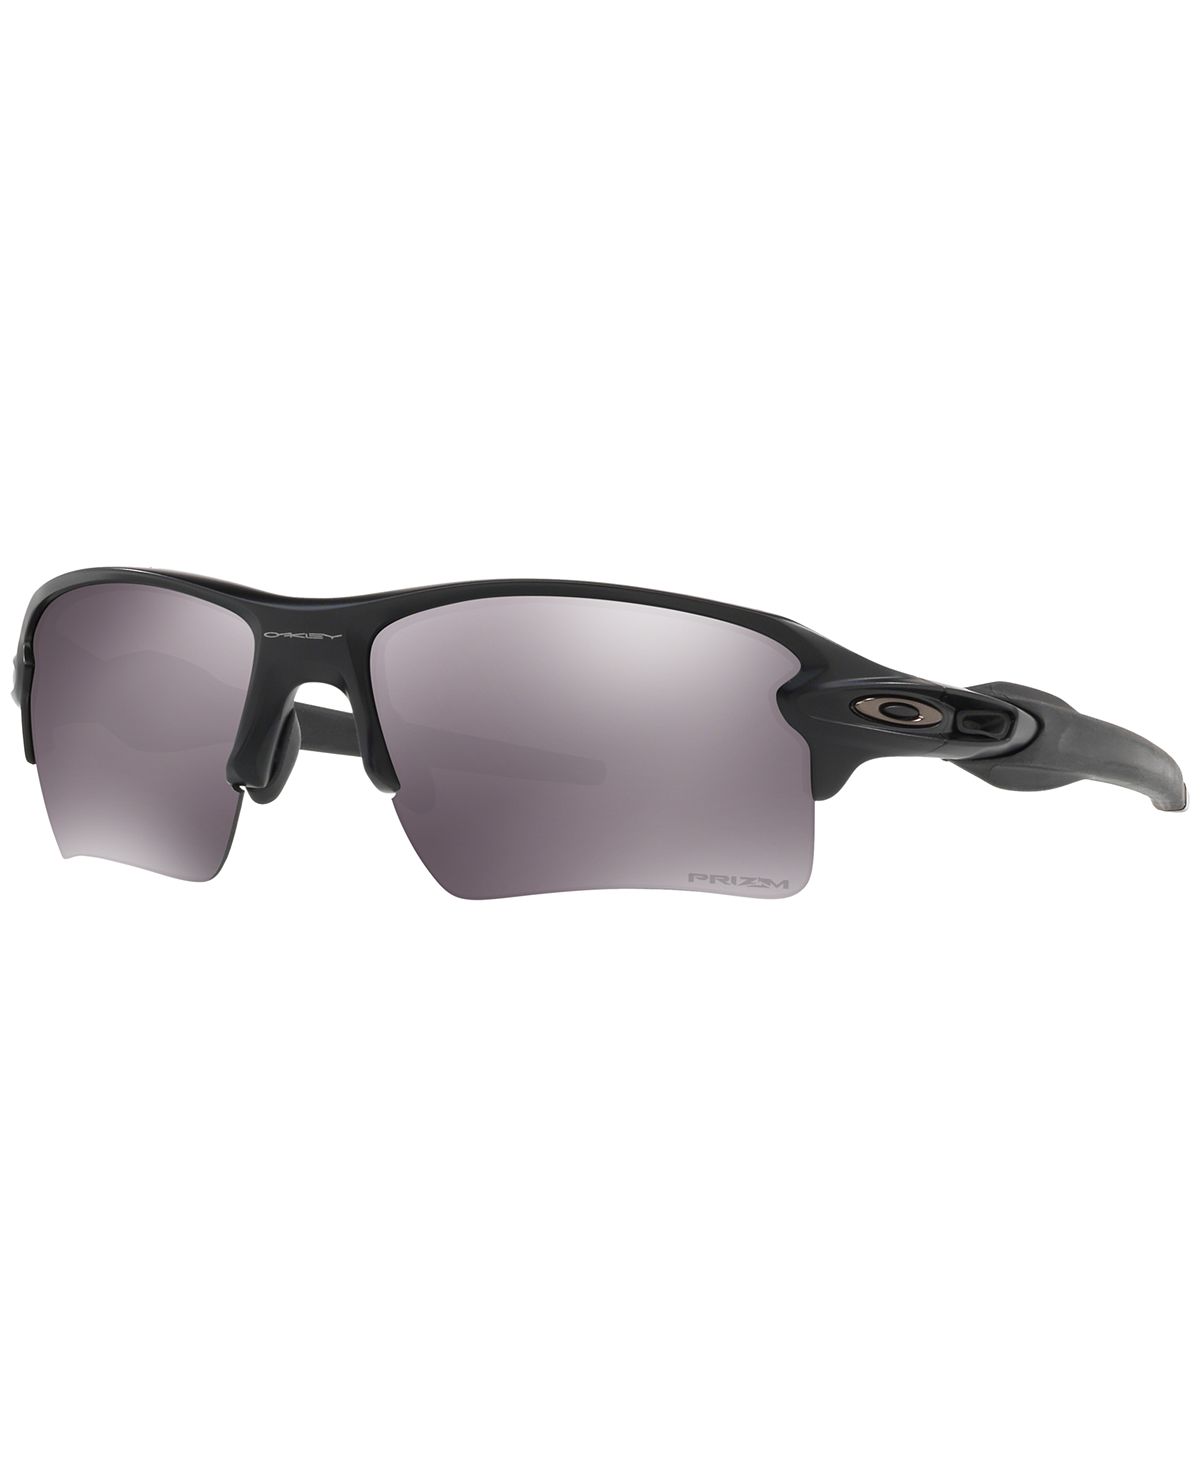 Солнцезащитные очки FLAK 2 XL OO9188 Oakley pfi 1100mbk matte black 160 мл 0849c001